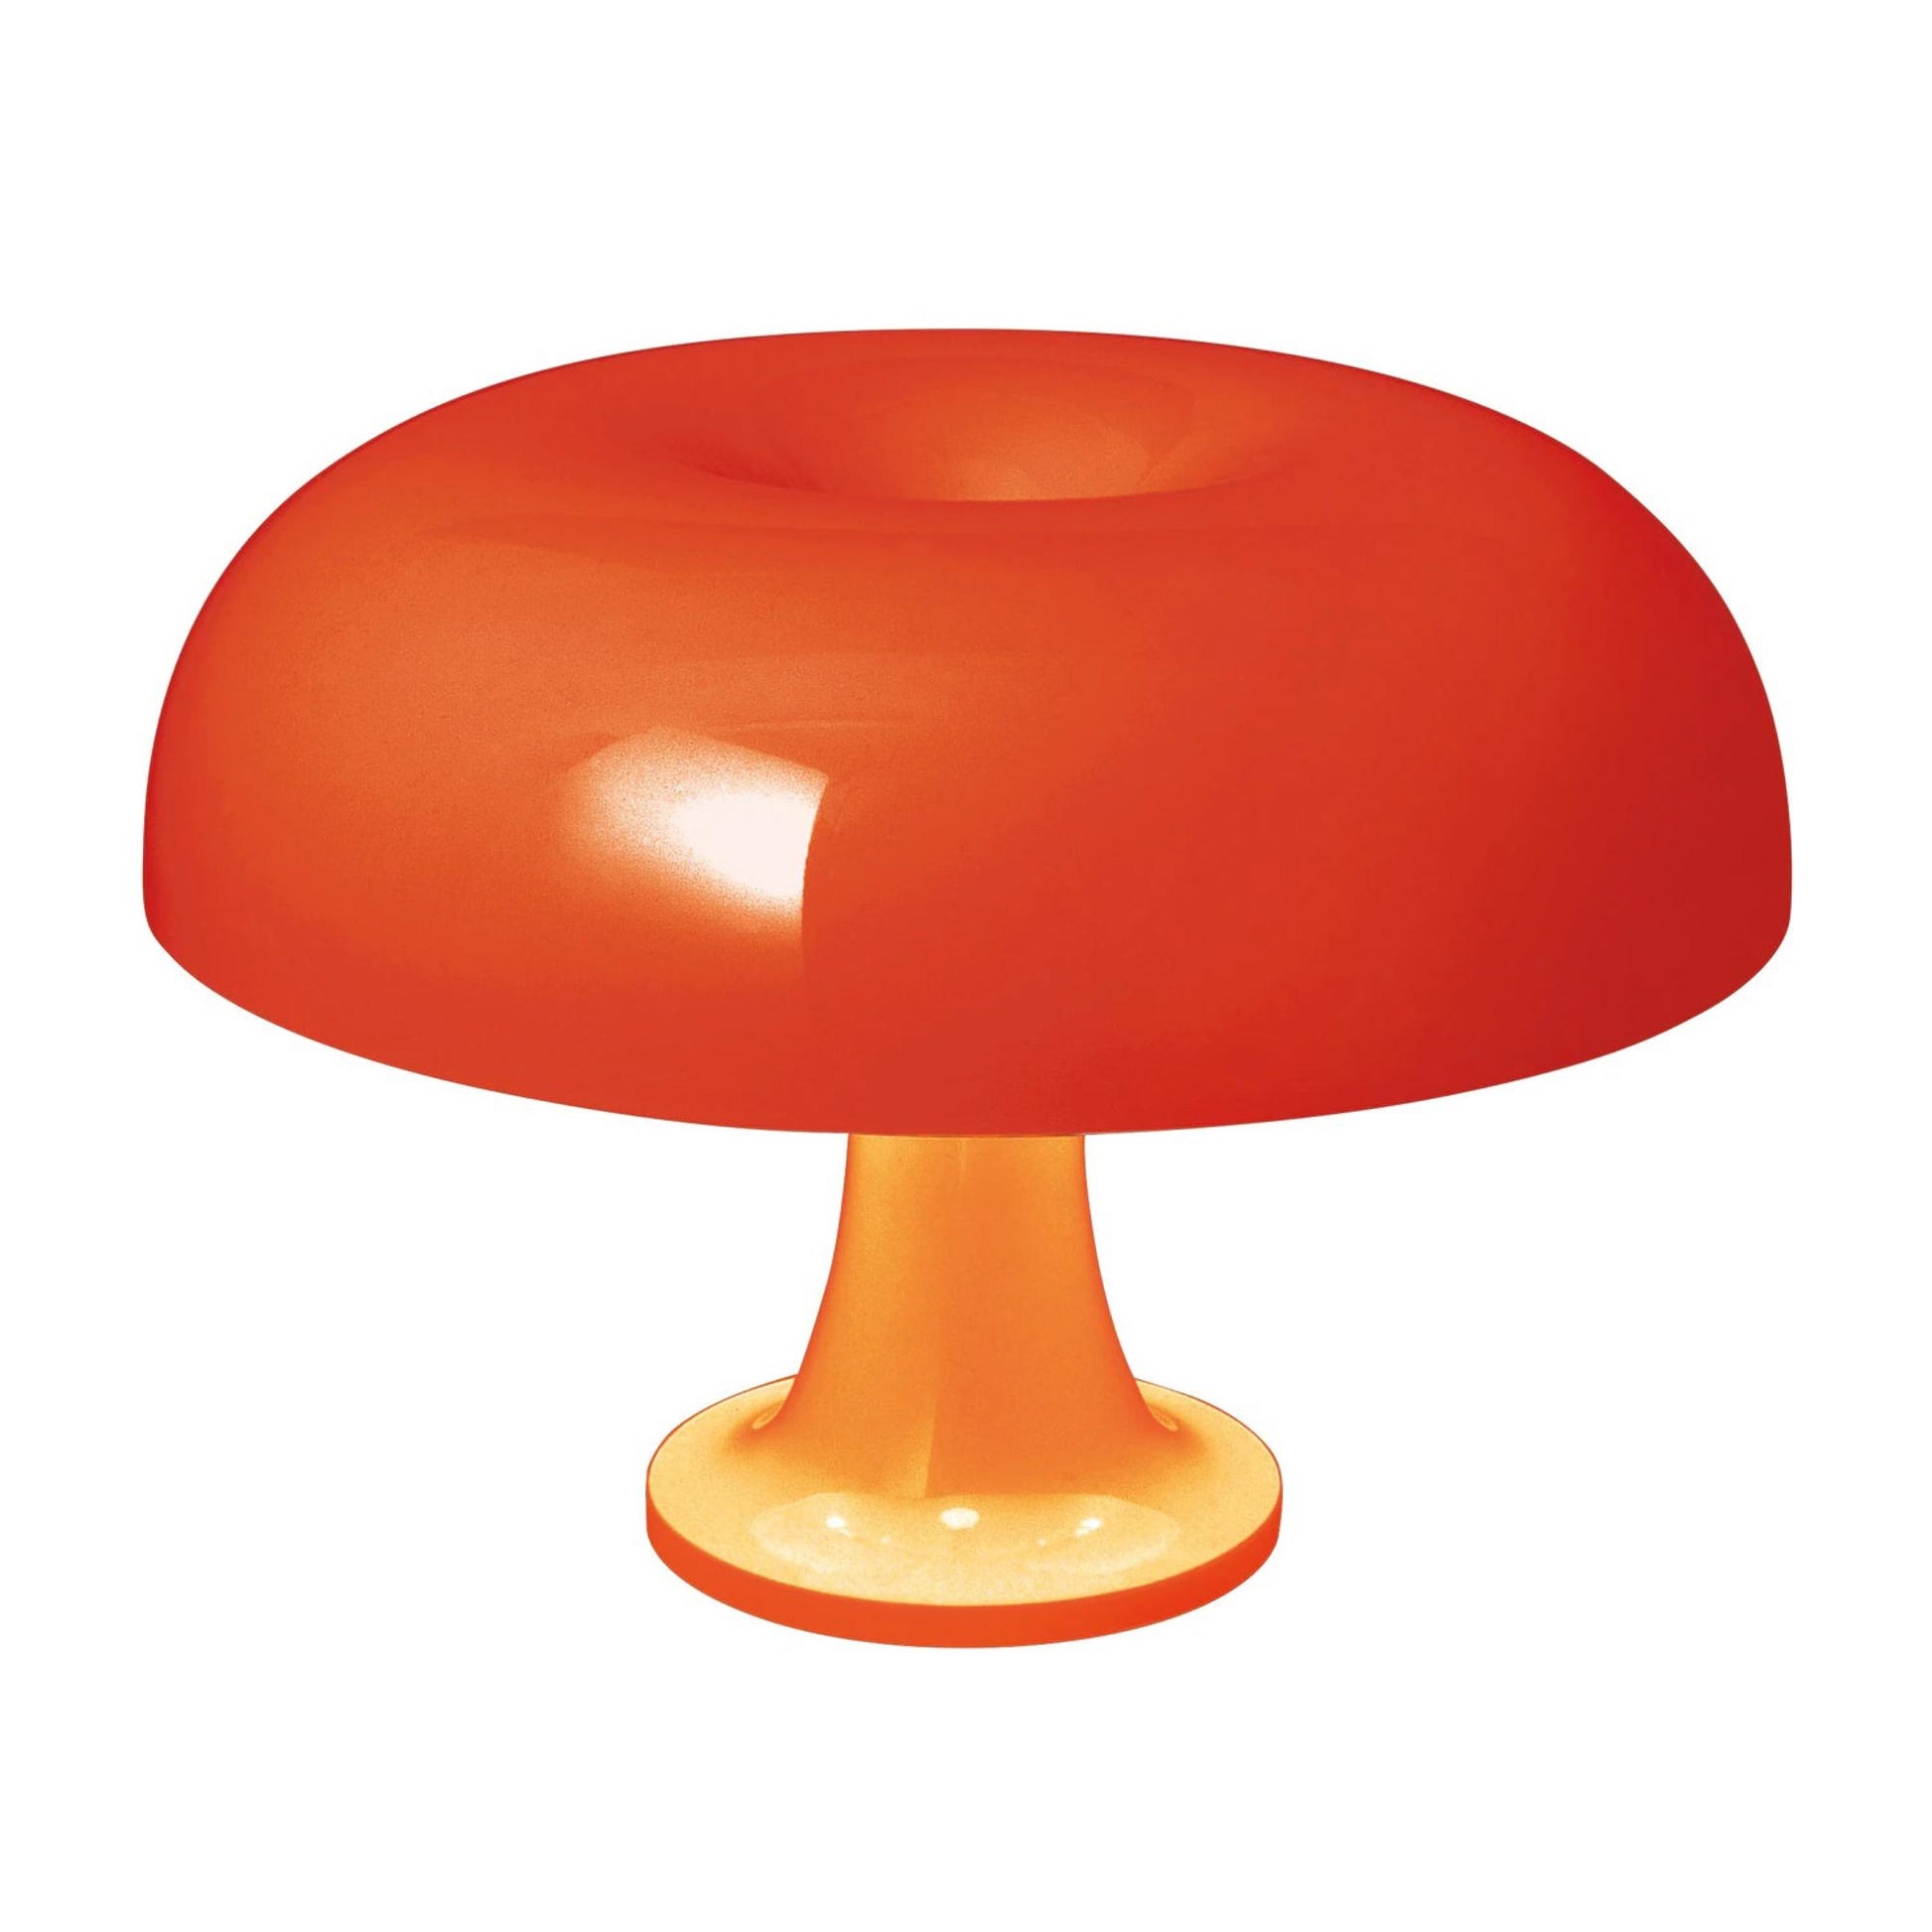 Nessino Table Lamp by Artemide #Orange